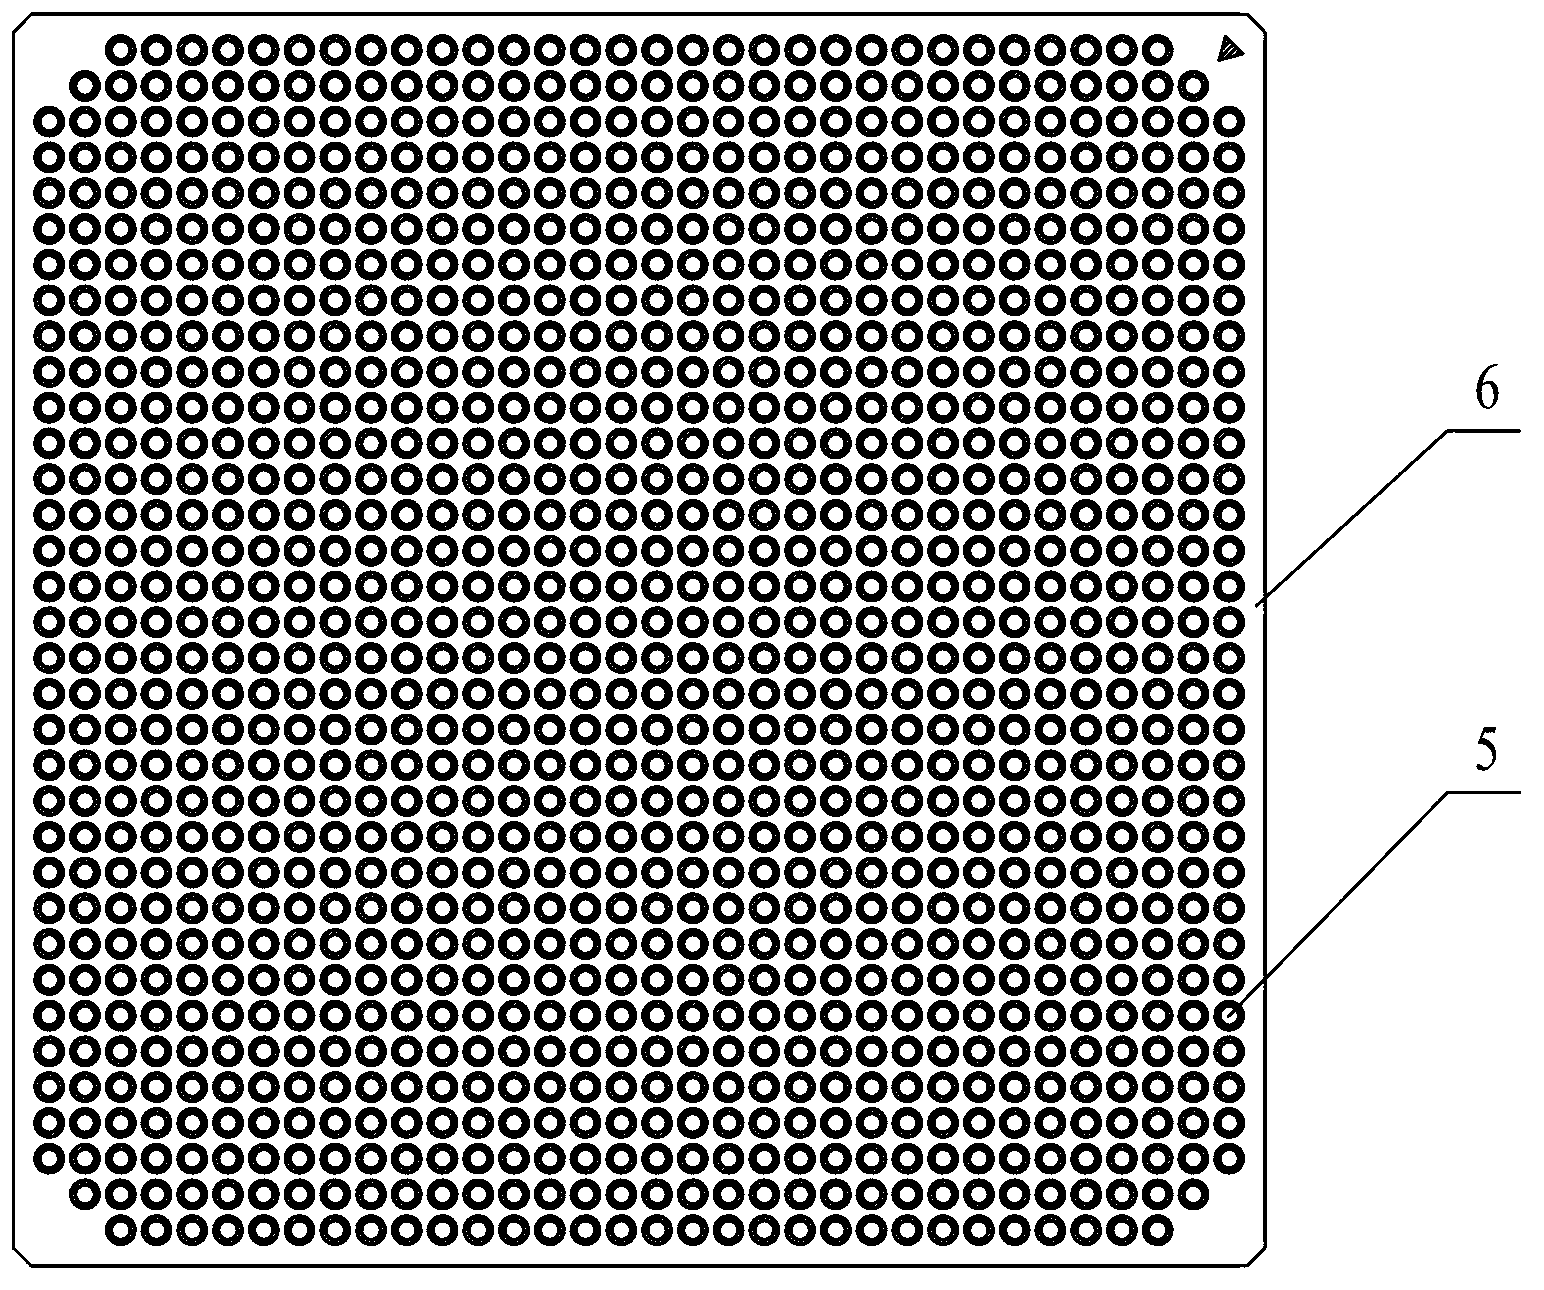 Assembling method of welding columns used for ceramic column grid array packaging